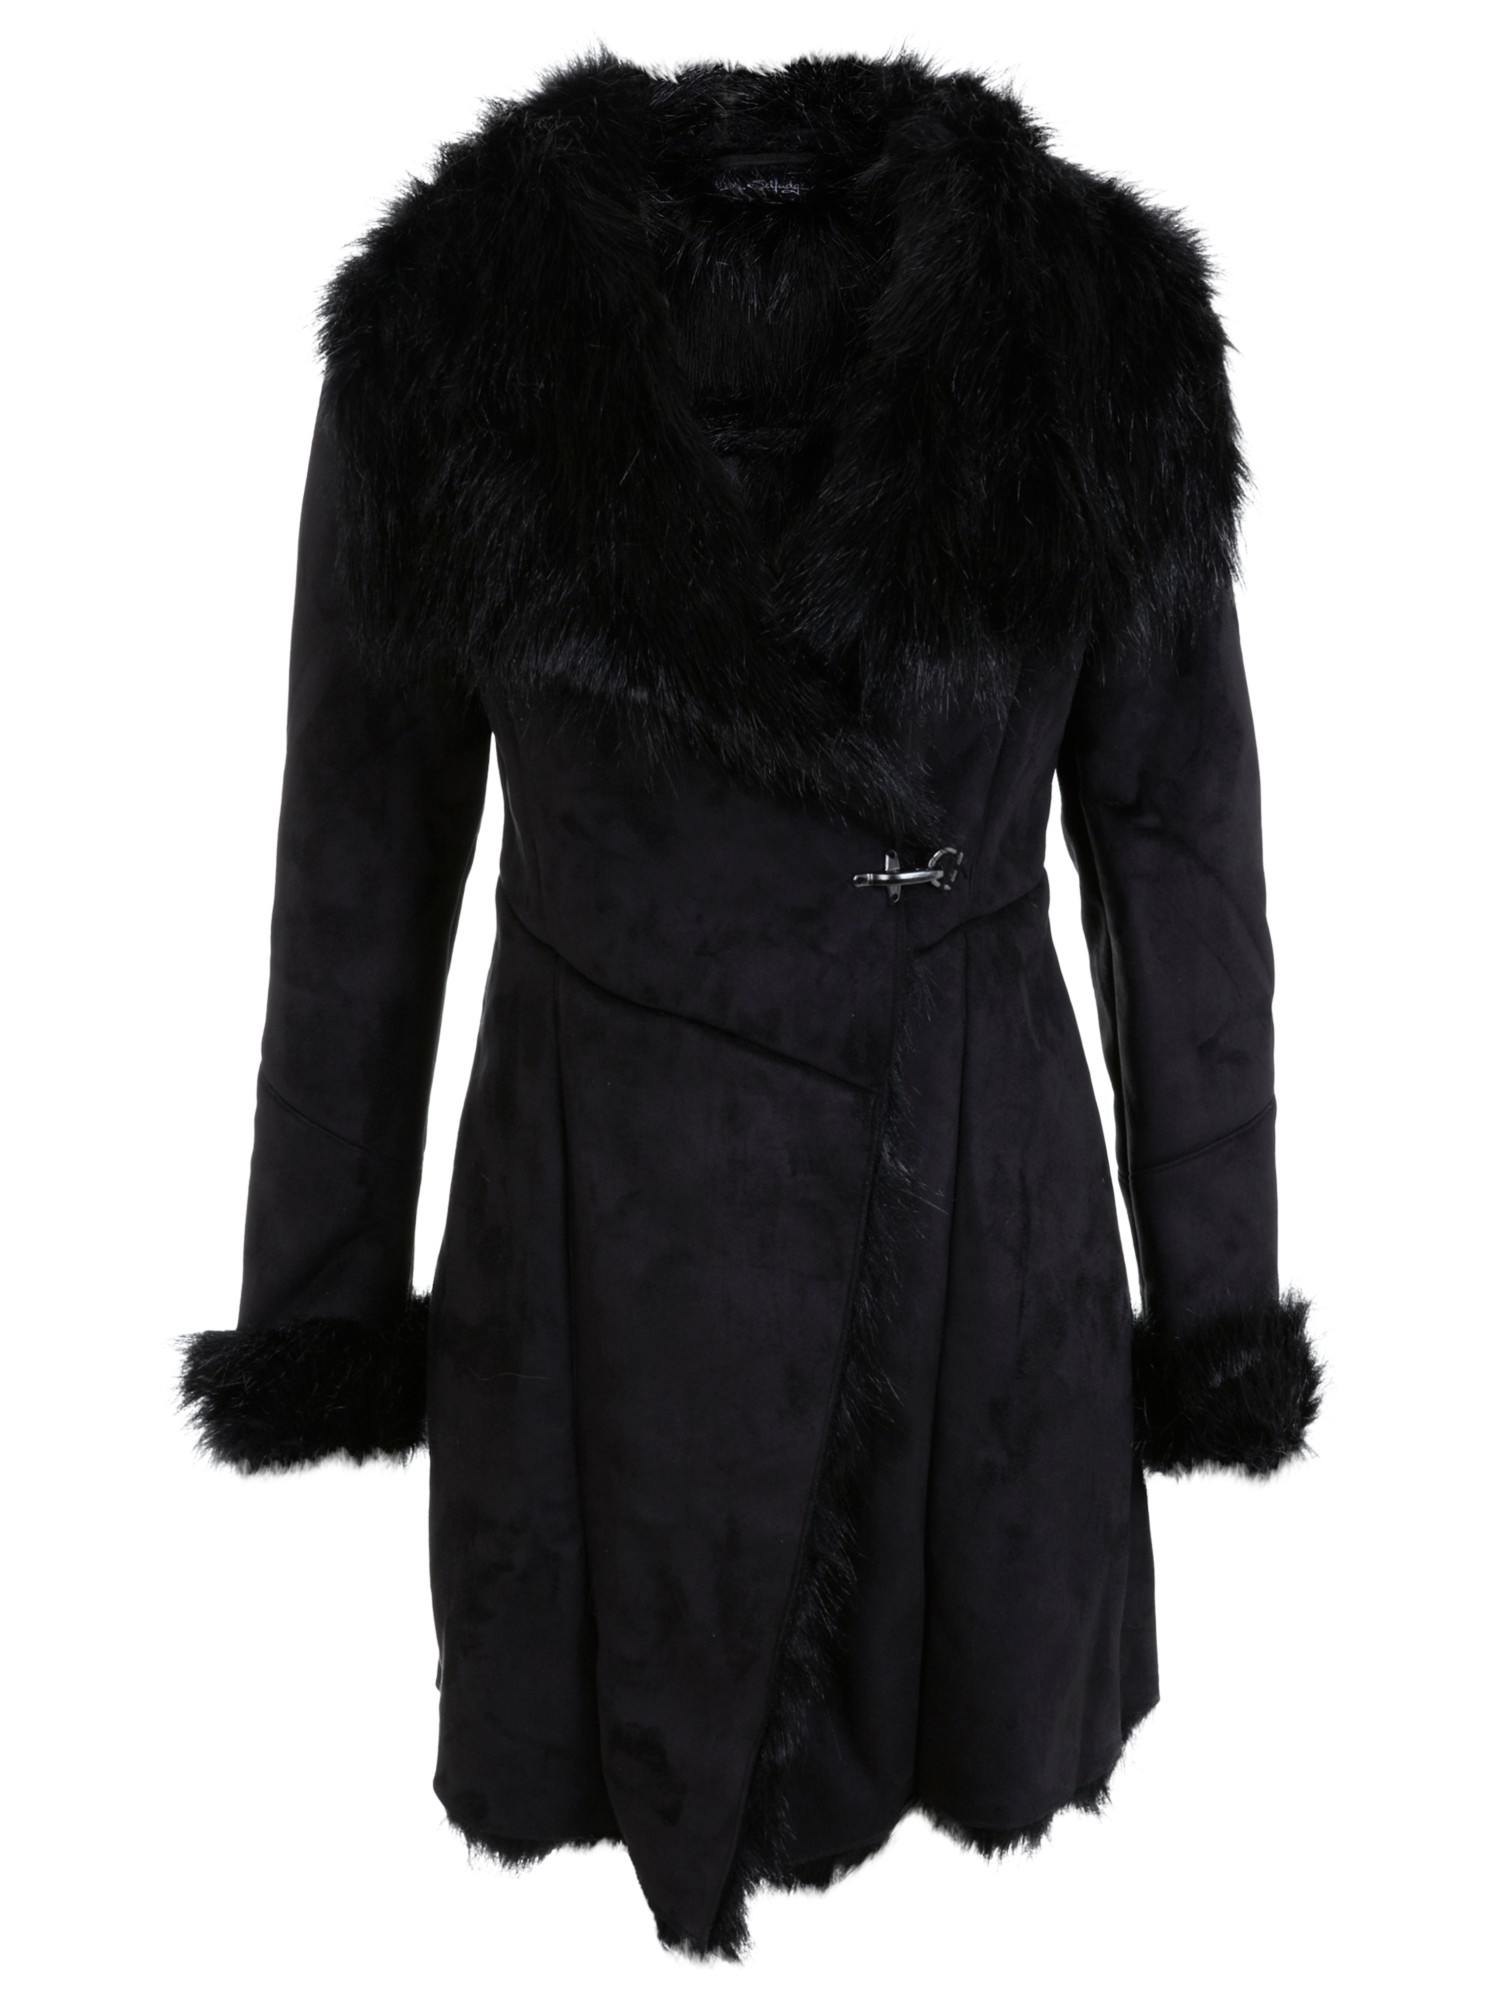 Miss Selfridge Faux Fur Shearling Coat in Black - Lyst